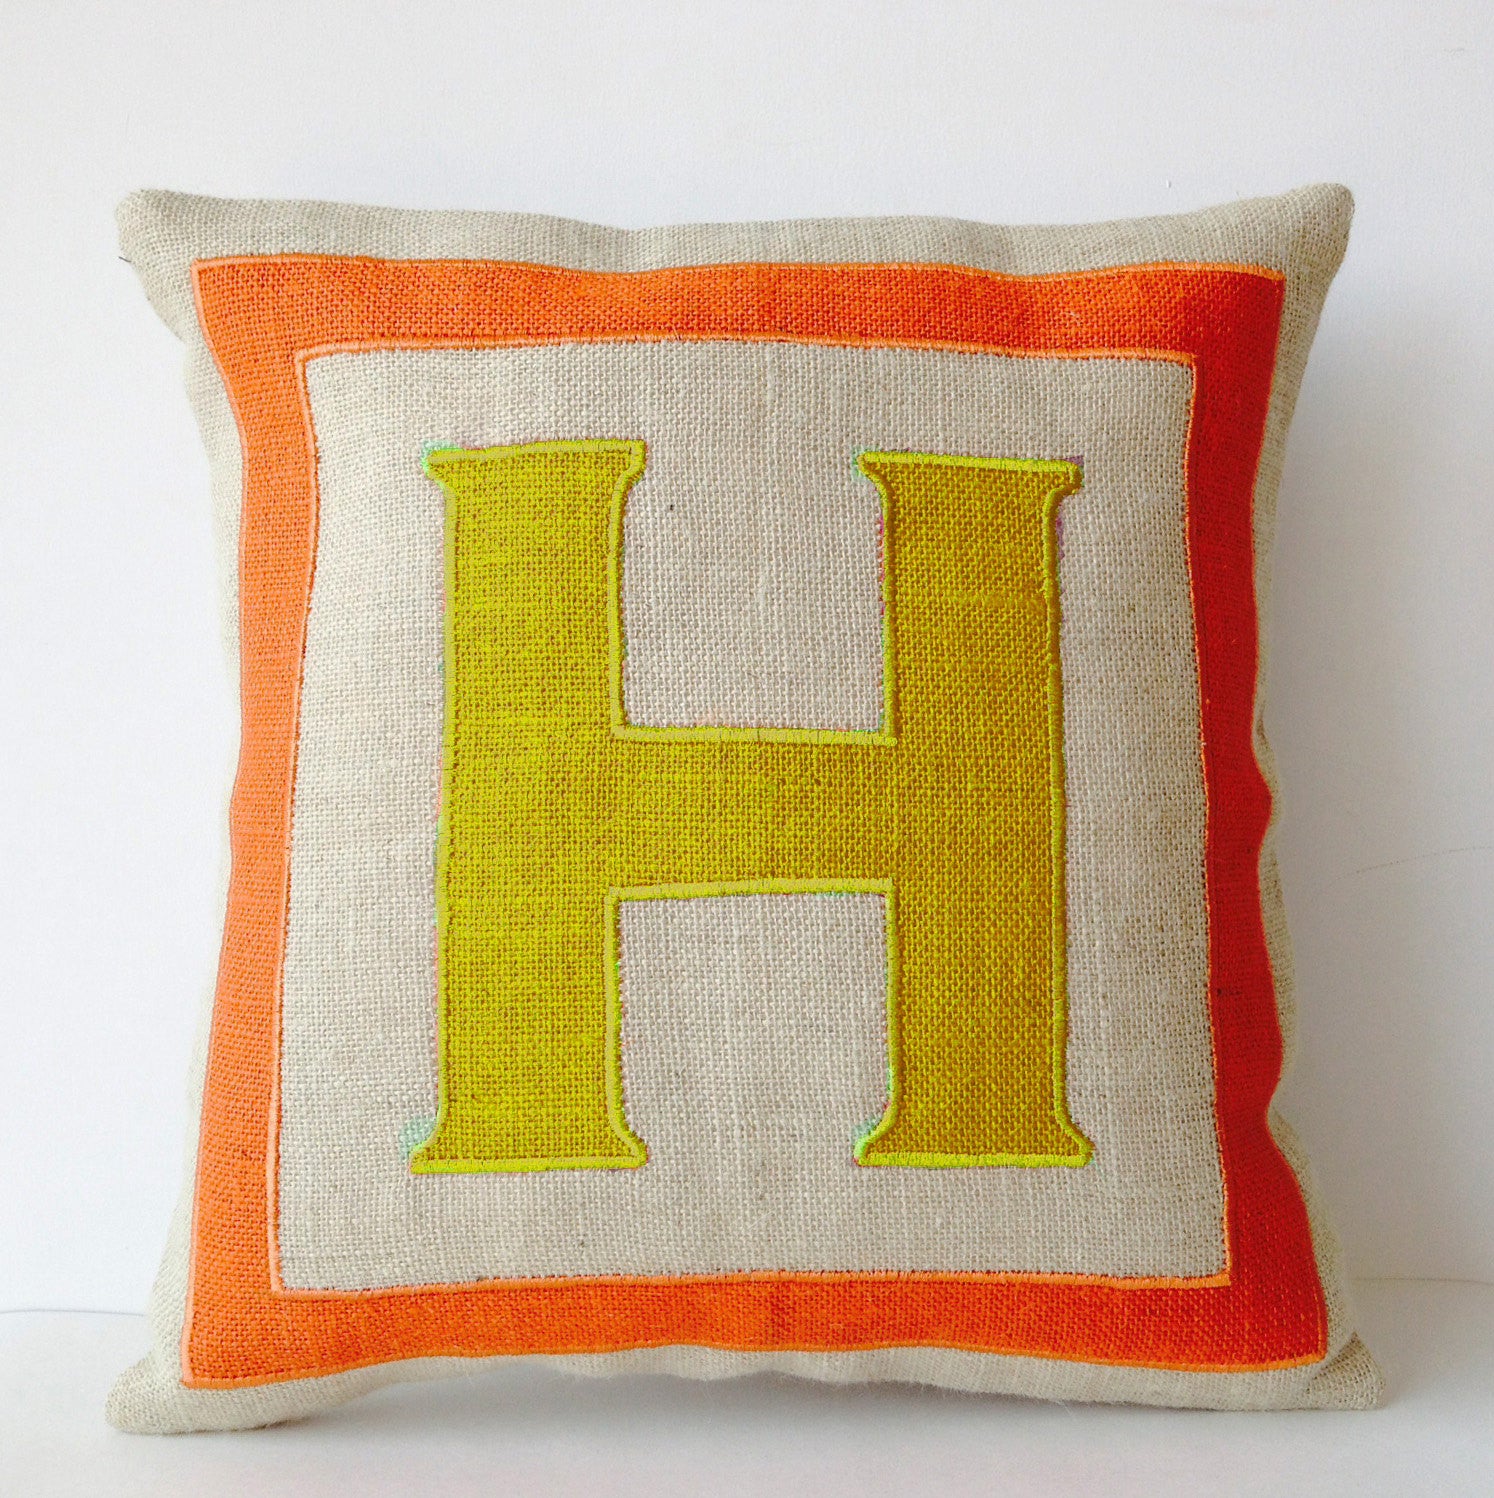 Handmade orange yellow throw pillow with monogram